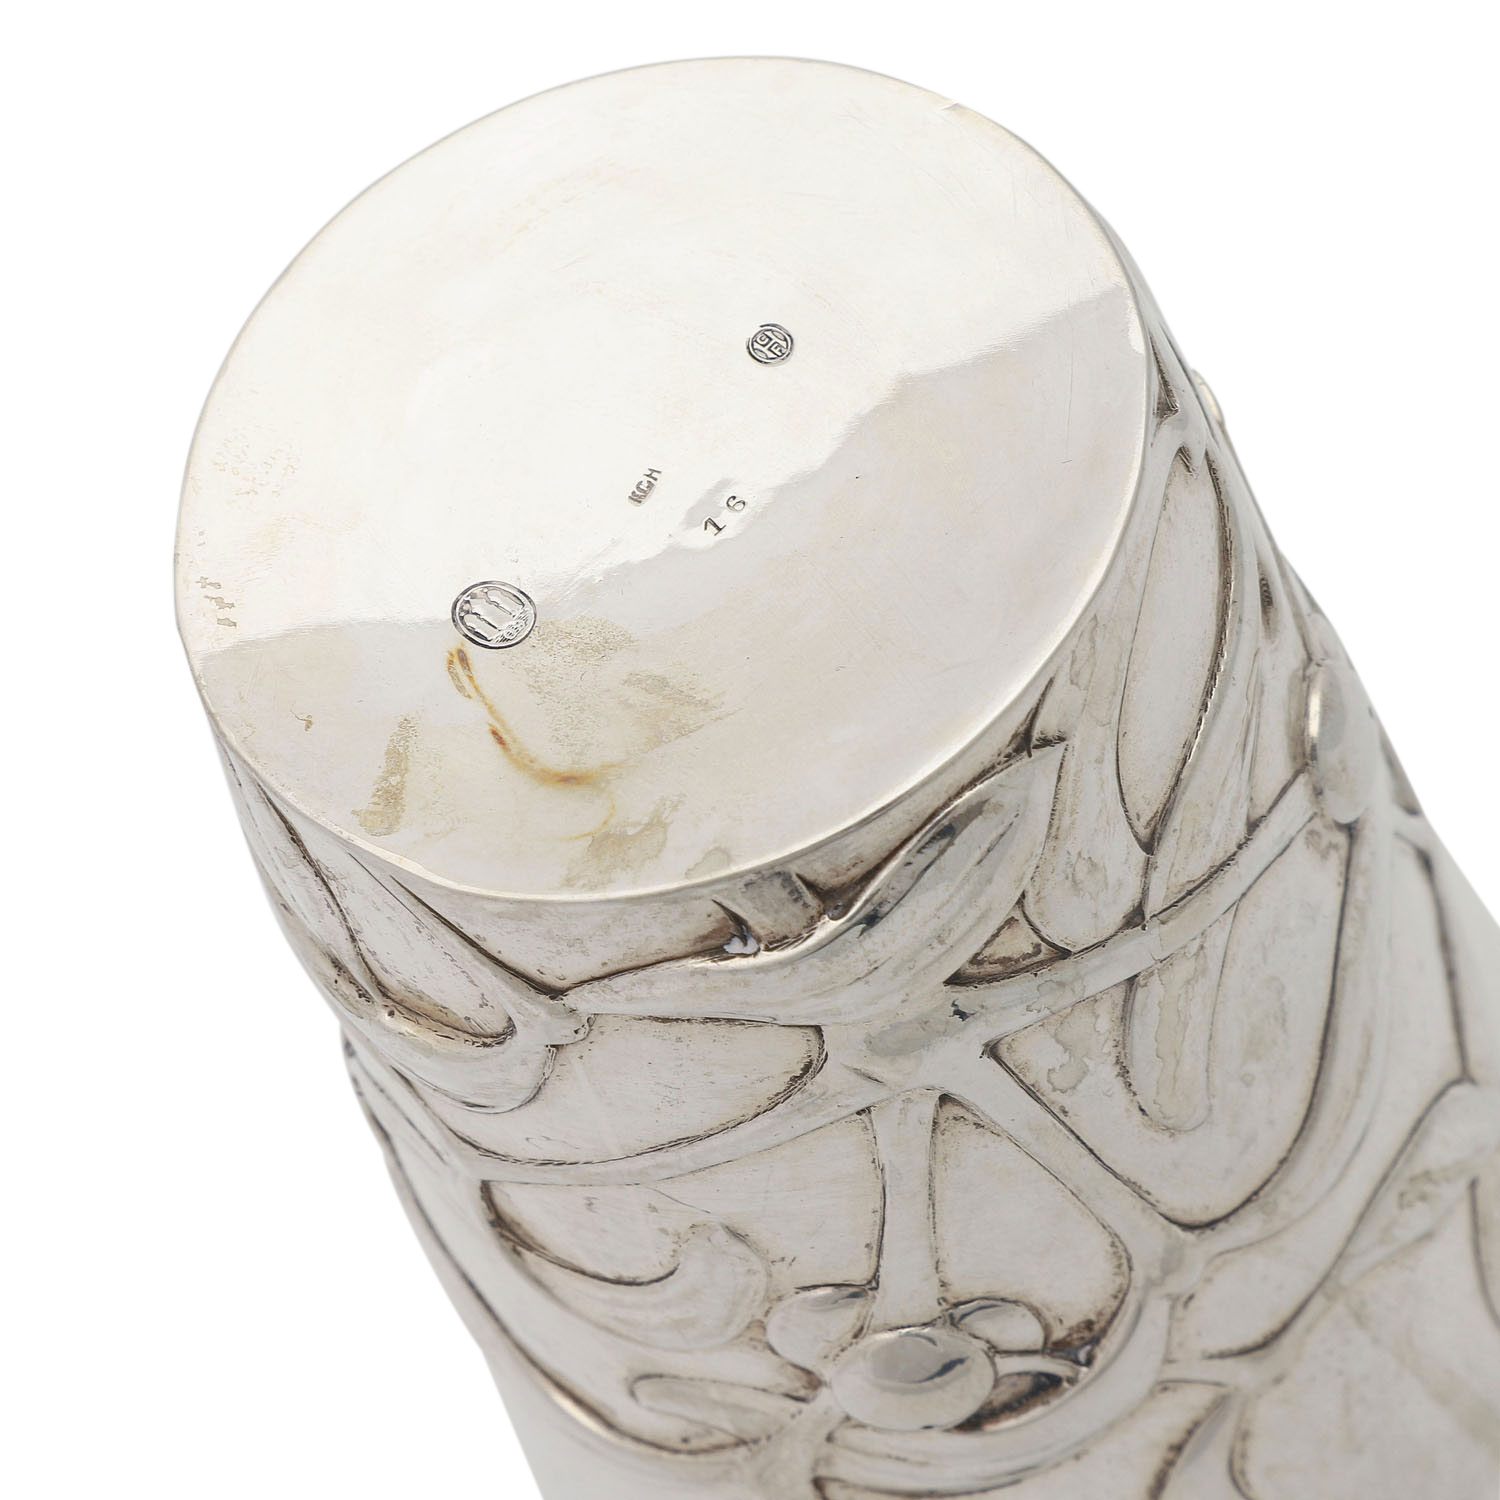 DÄNEMARK Jugendstil-Vase, Silber, um 1909.CHRISTIAN F. HEISE, hohe, konische Form mit Reliefdekor - Image 6 of 6